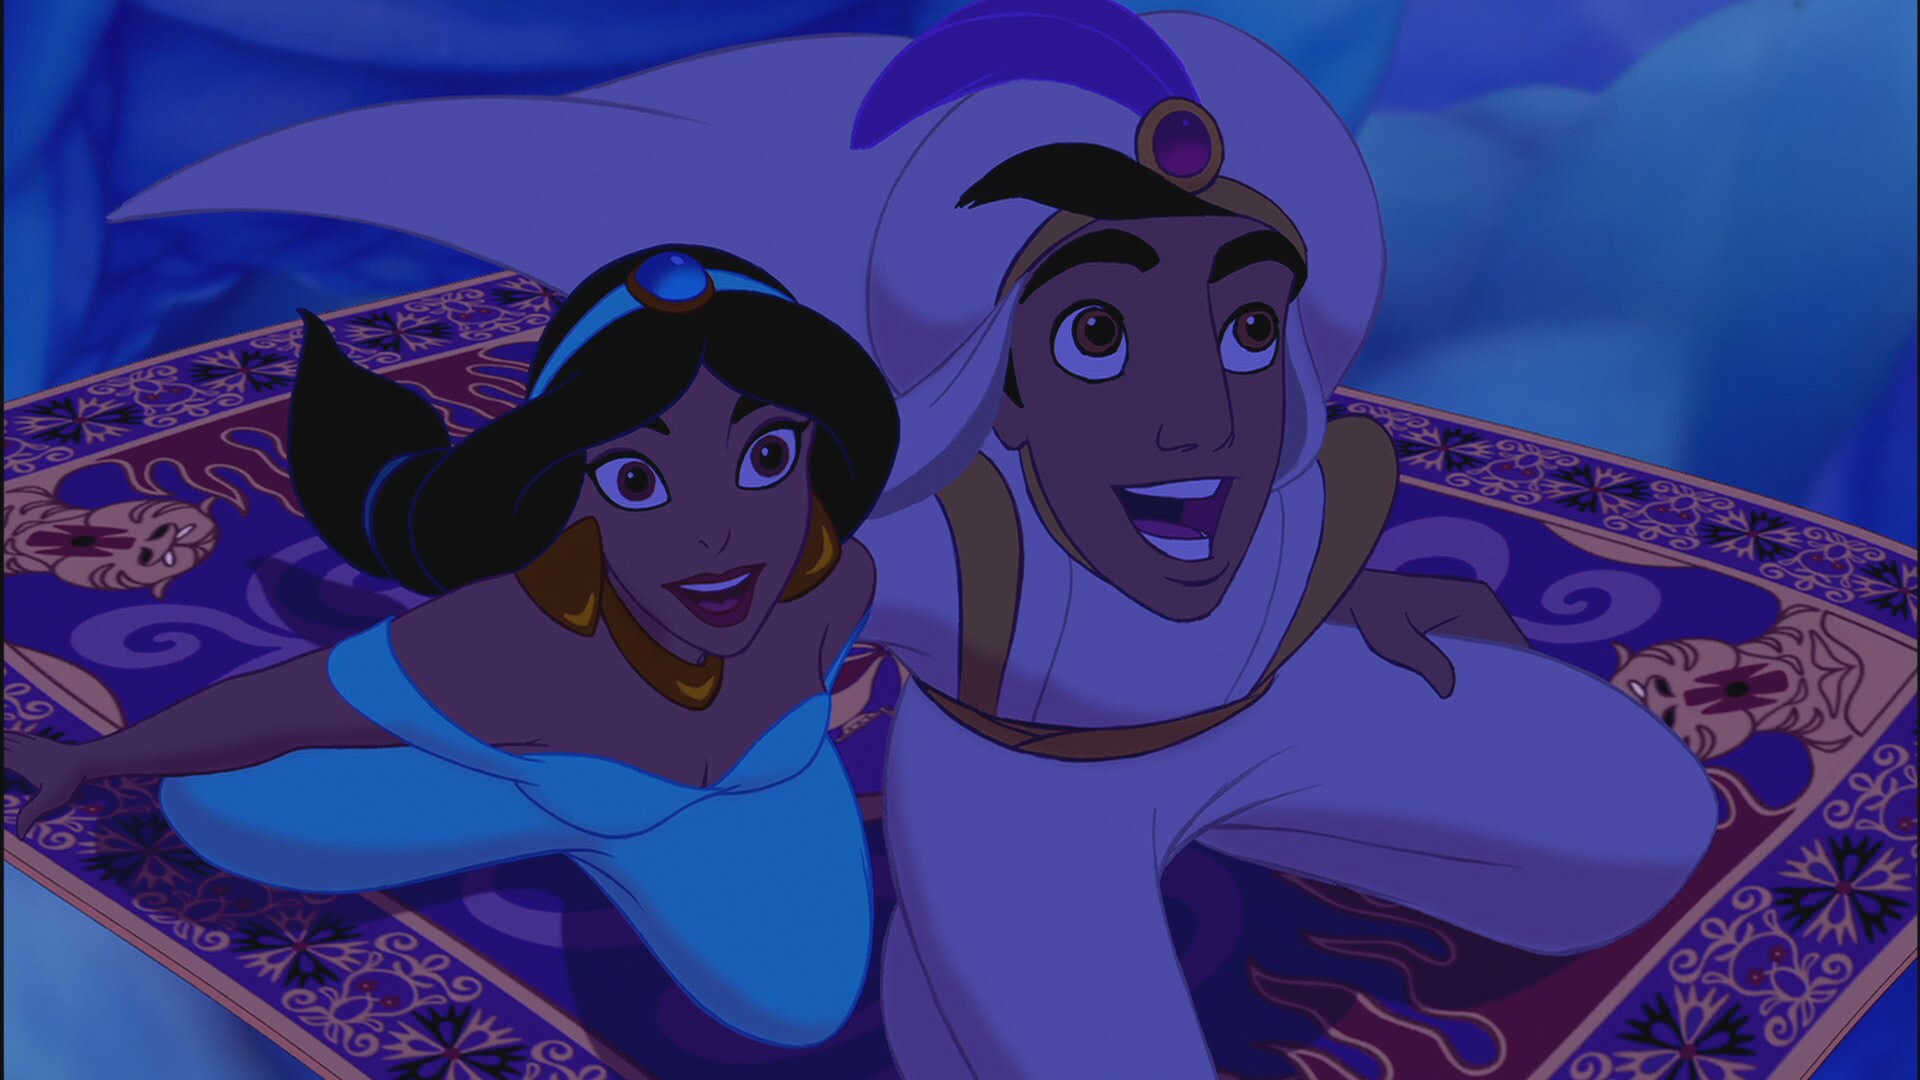 Os 30 anos de 'Aladdin': 3 curiosidades sobre o filme que marcou a